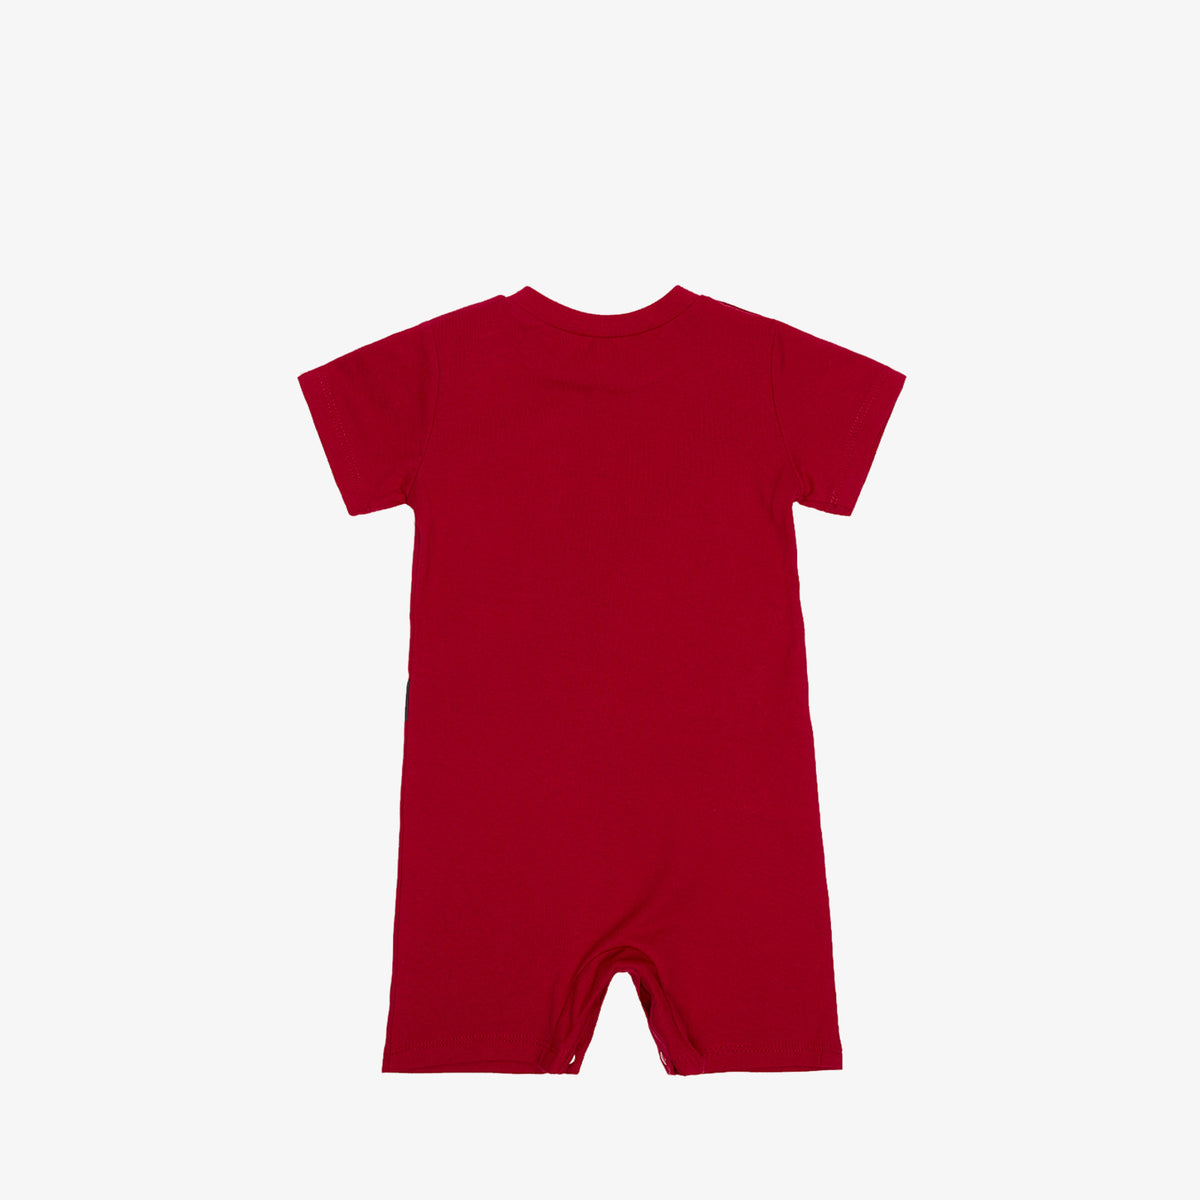 Jordan Jumpman Infant Knit Romper - Red